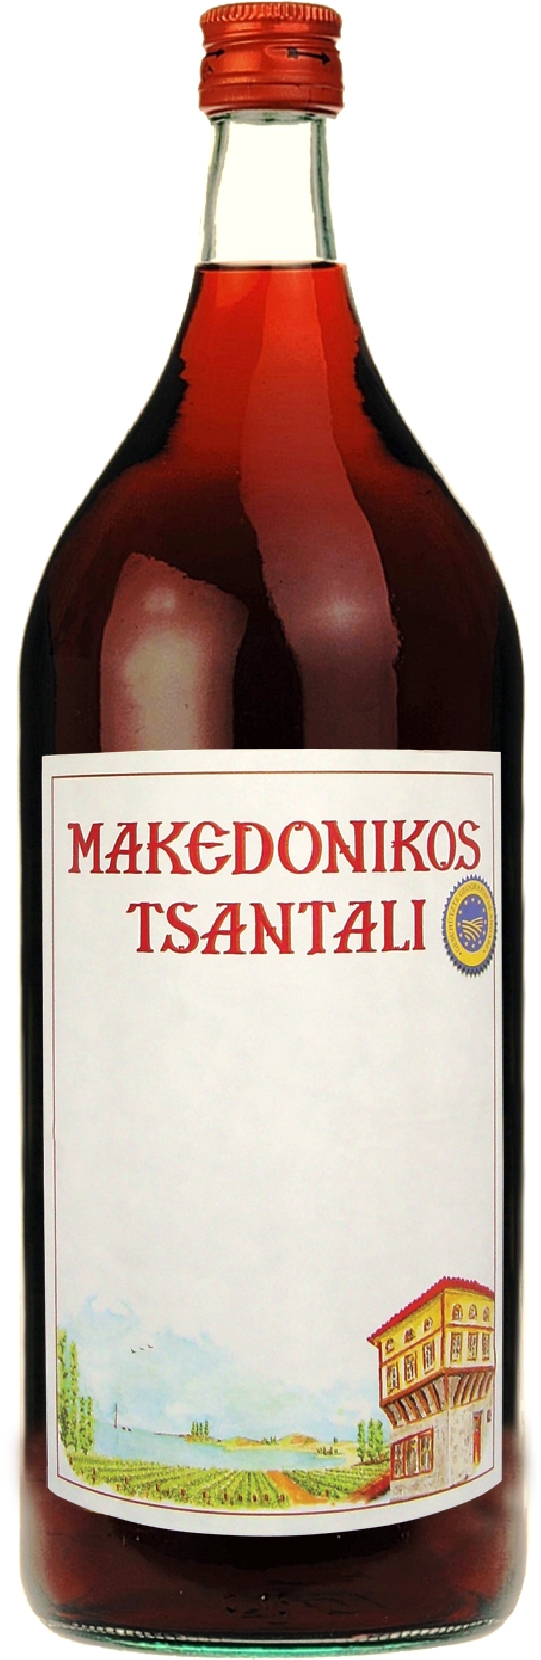 Tsantali Makedonikos